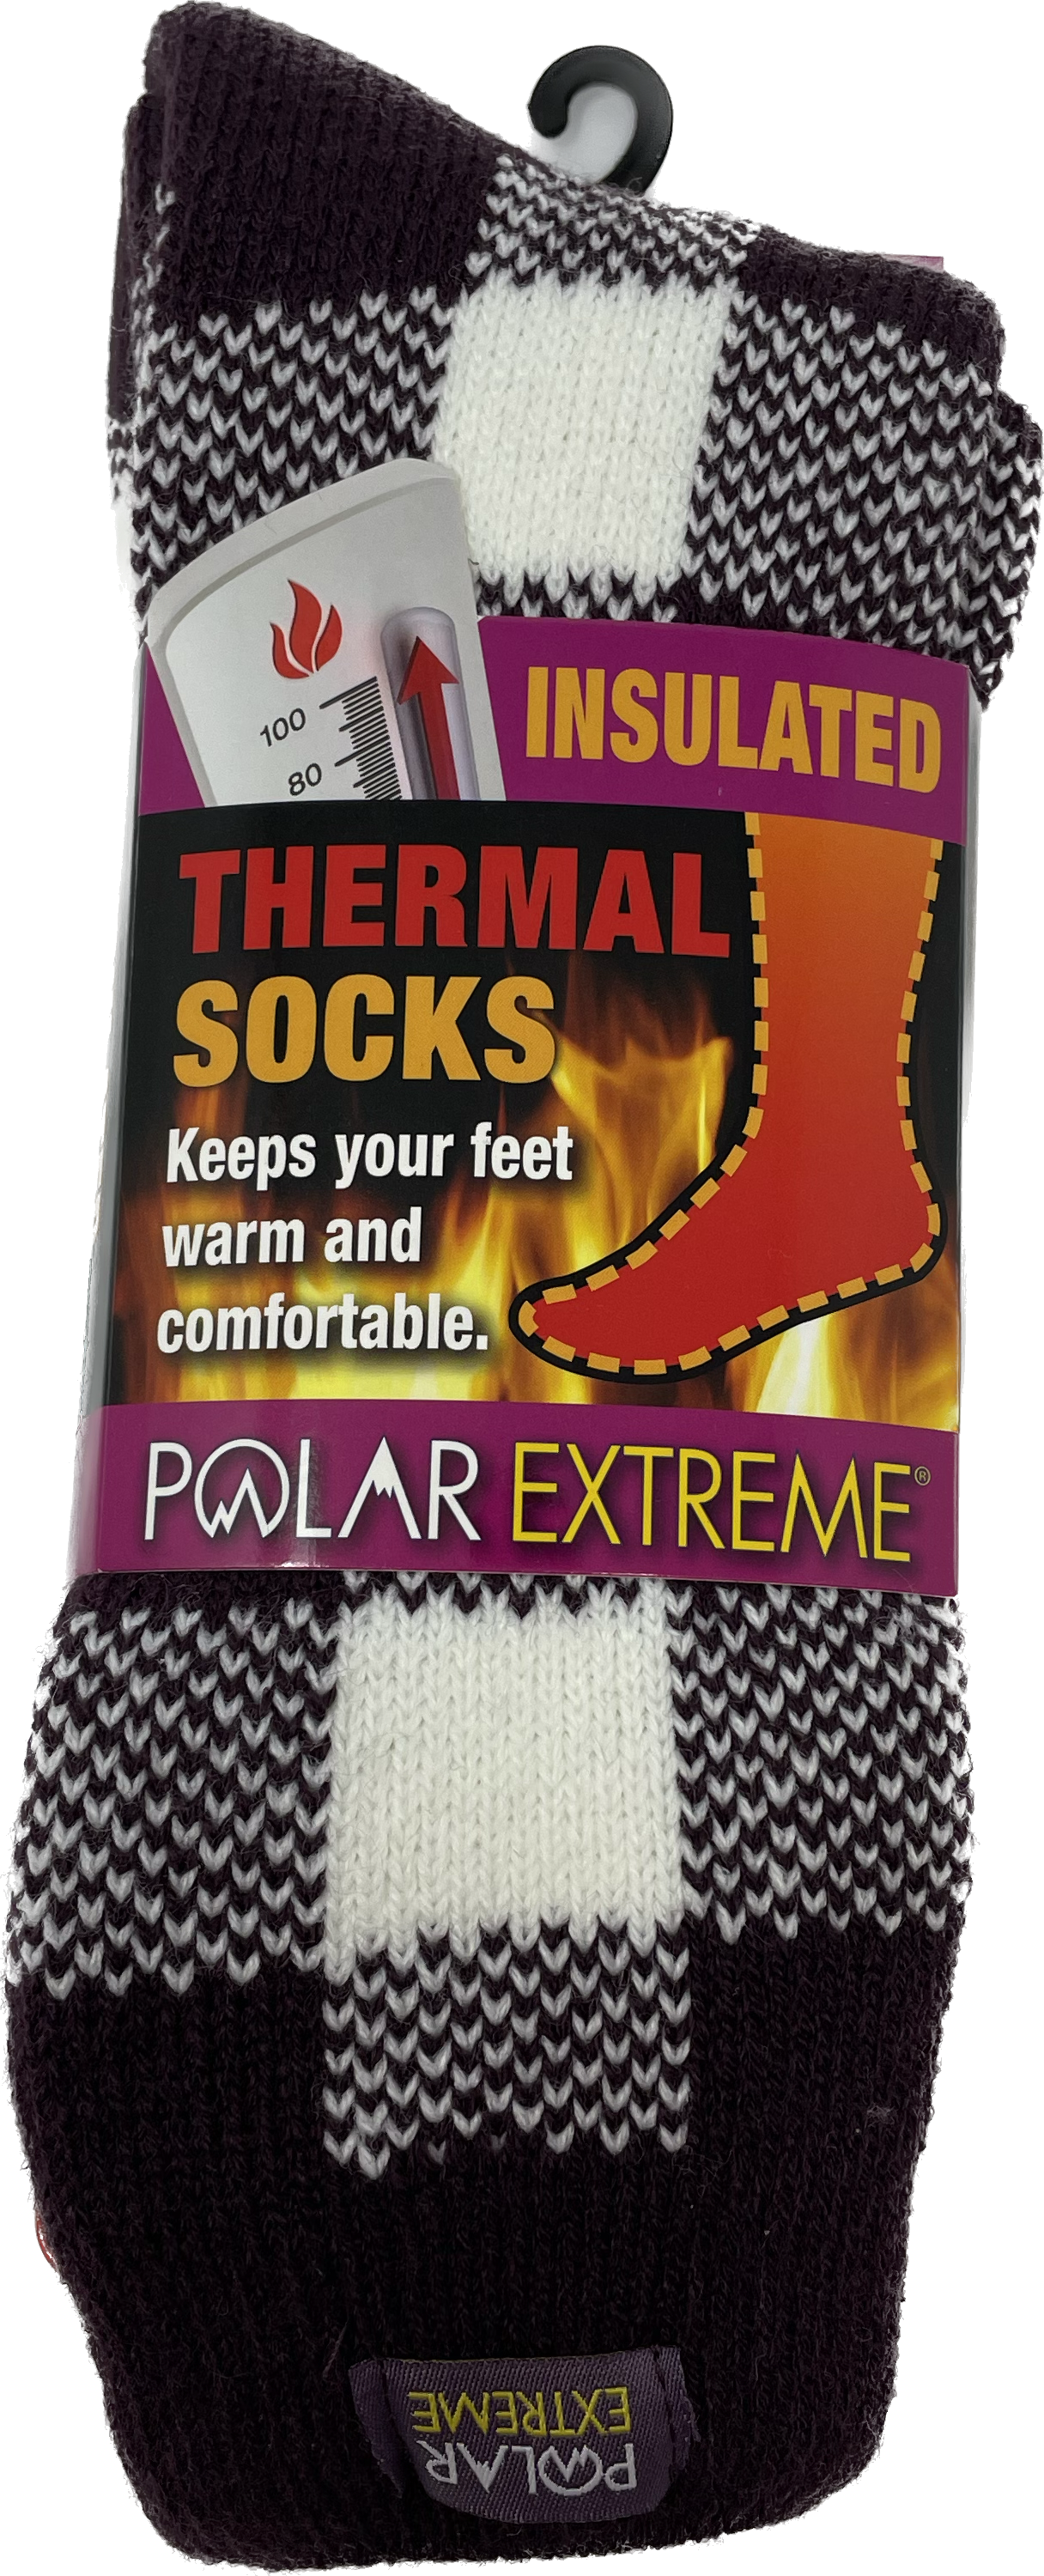 Polar Extreme Women's Thermal Socks Plaid Brushed - My Secret Garden